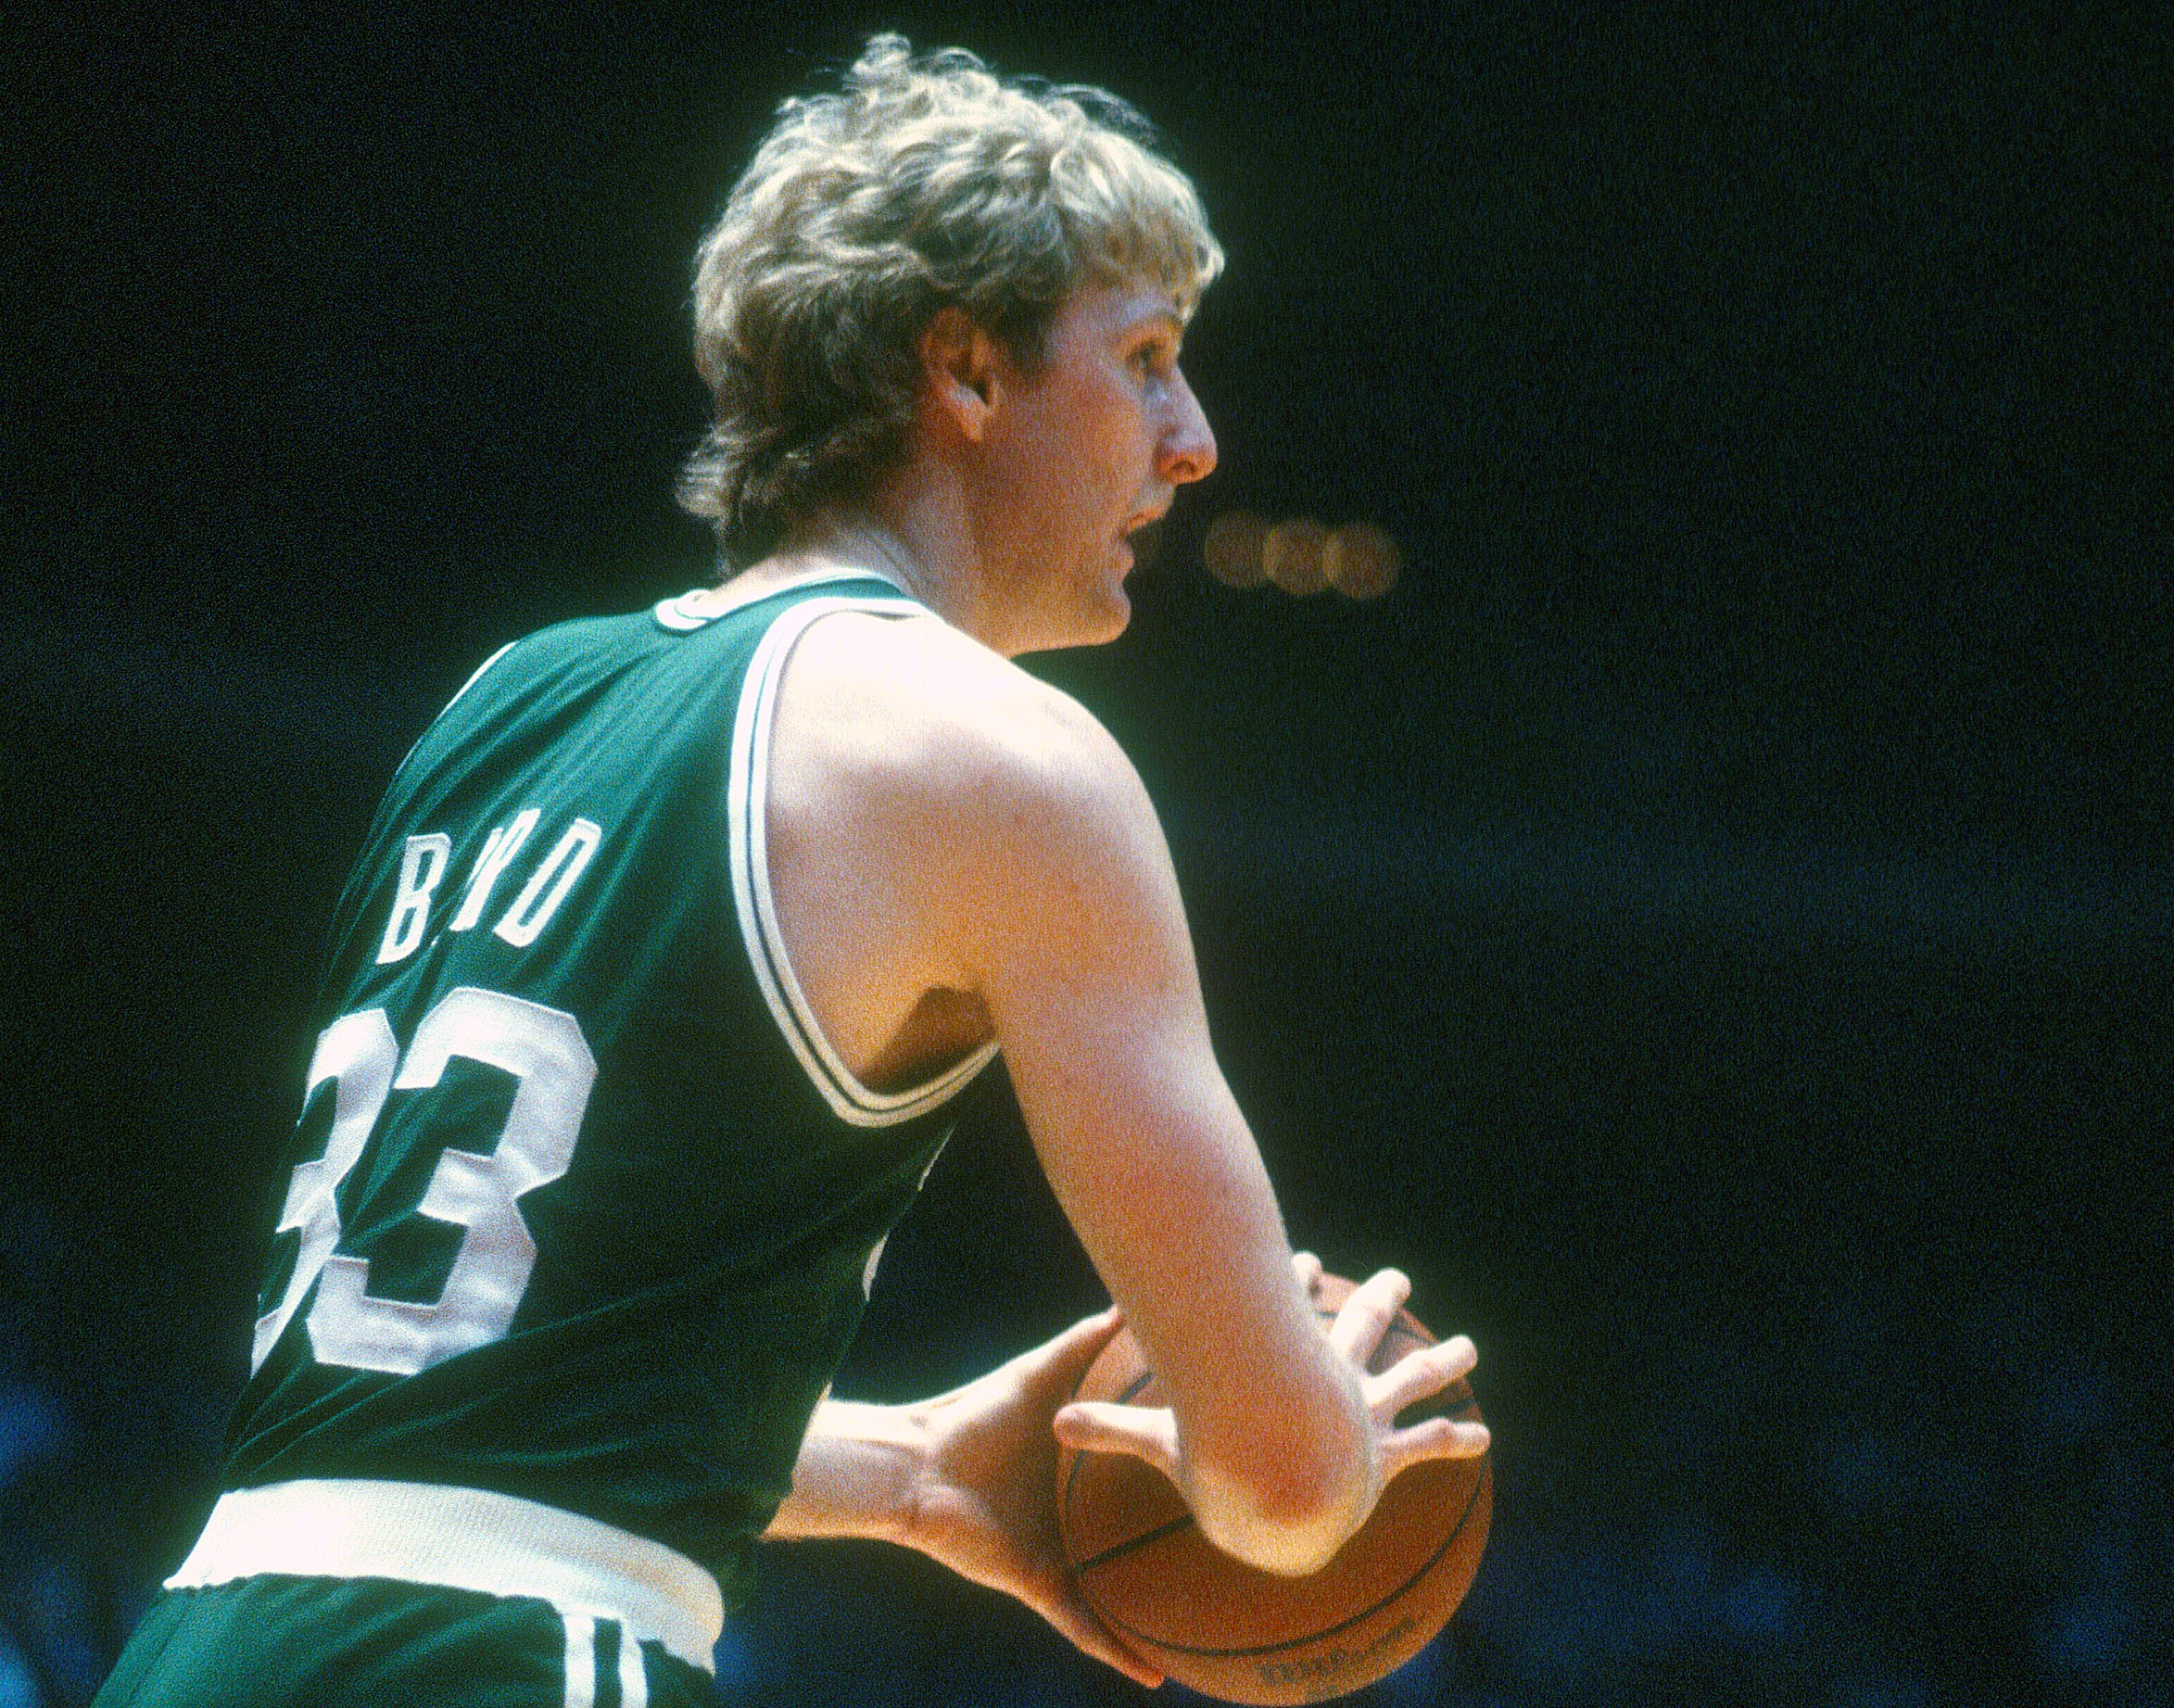 Larry Bird of the Boston Celtics looks to shoot against the Houston Rockets.